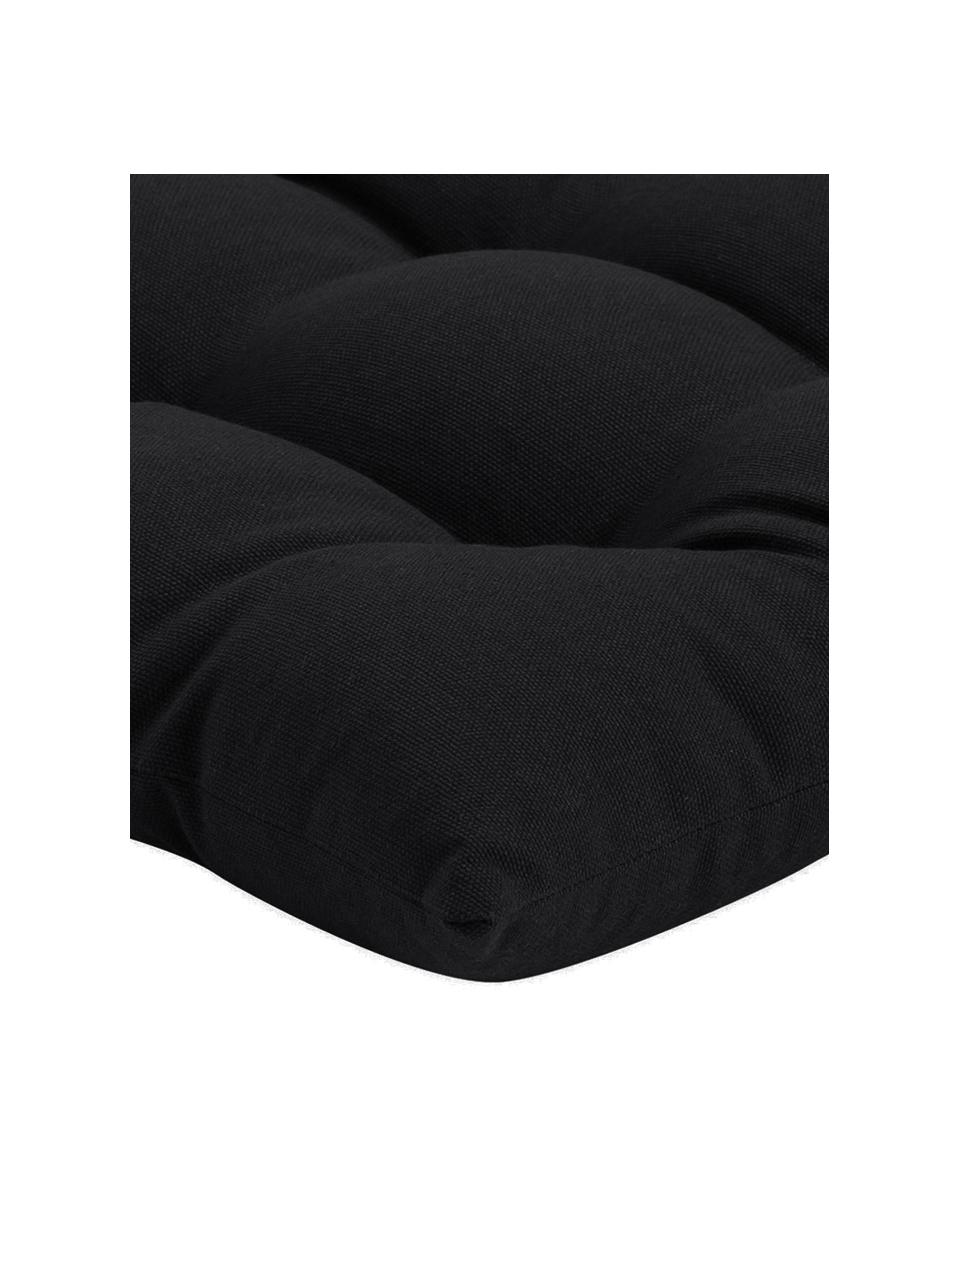 Katoenen stoelkussen Ava in zwart, Zwart, B 40 x L 40 cm